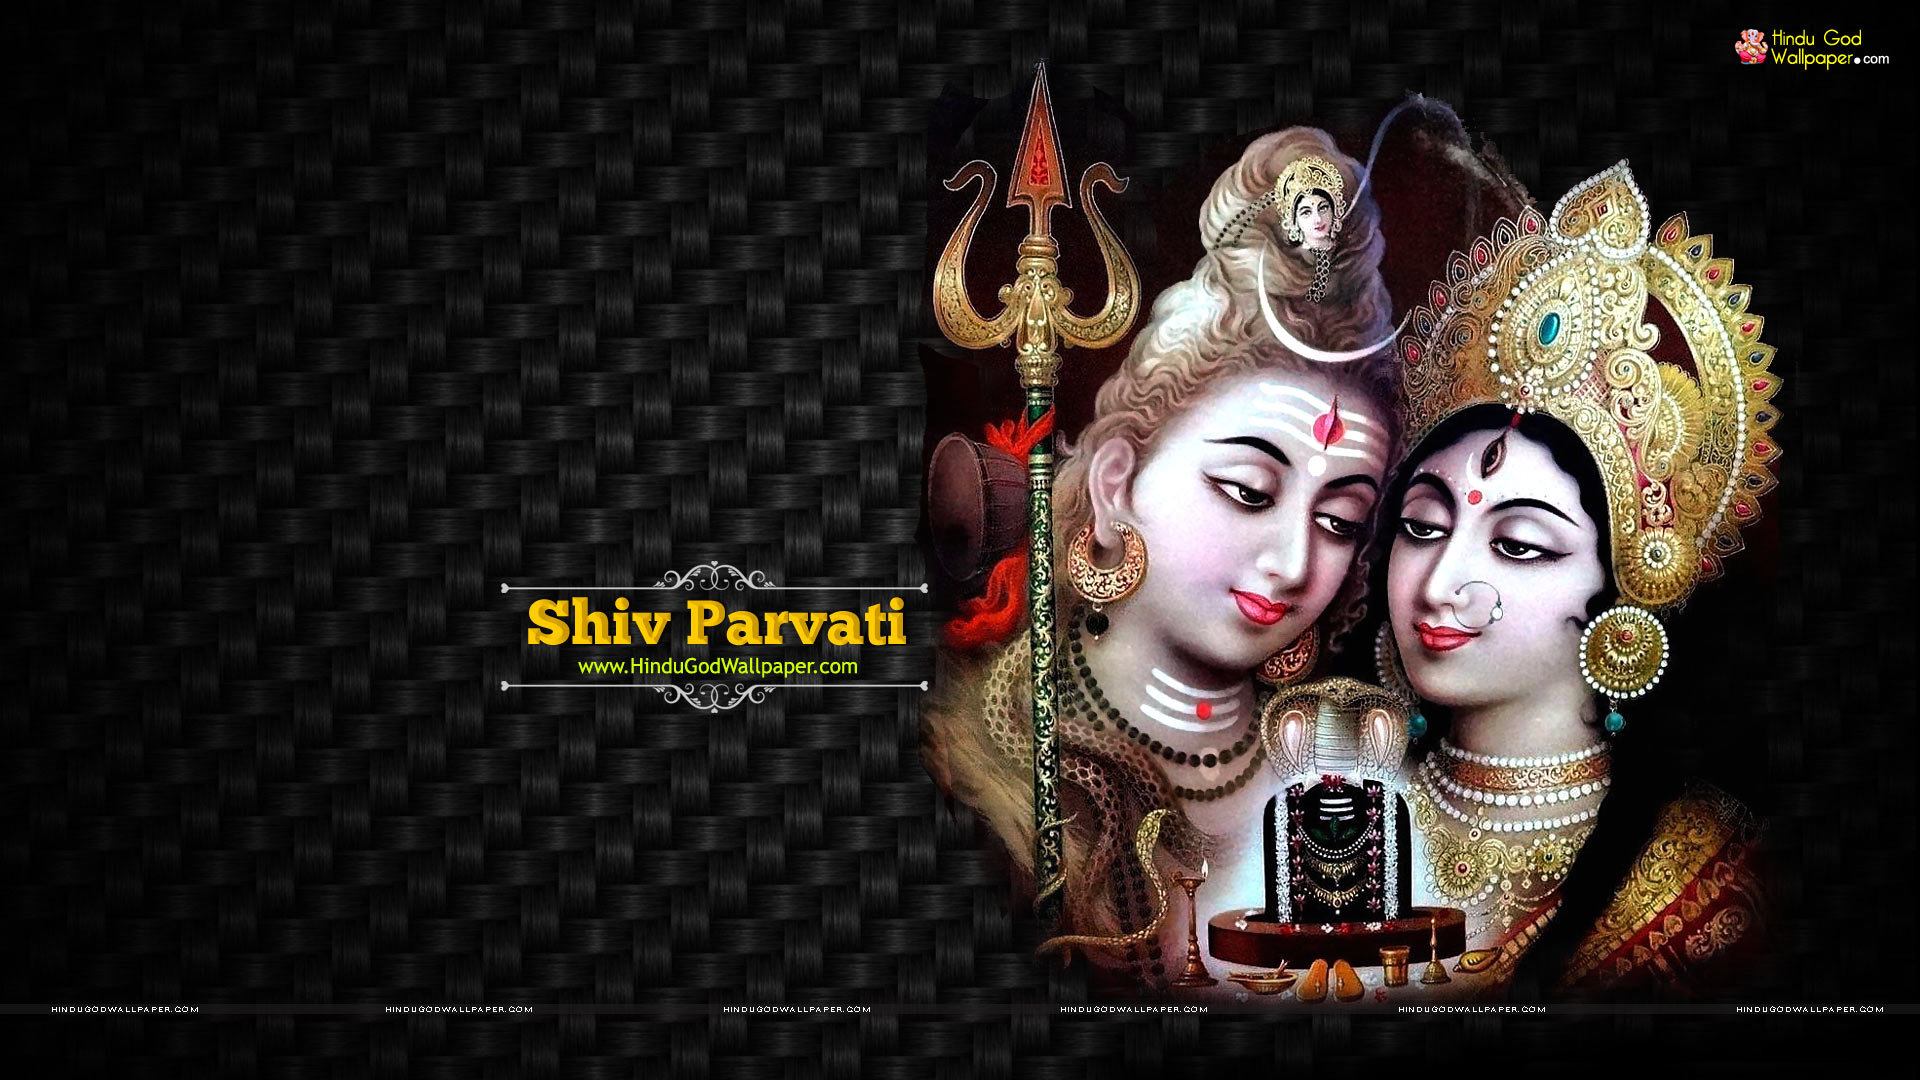 Lord Shiv Parvati